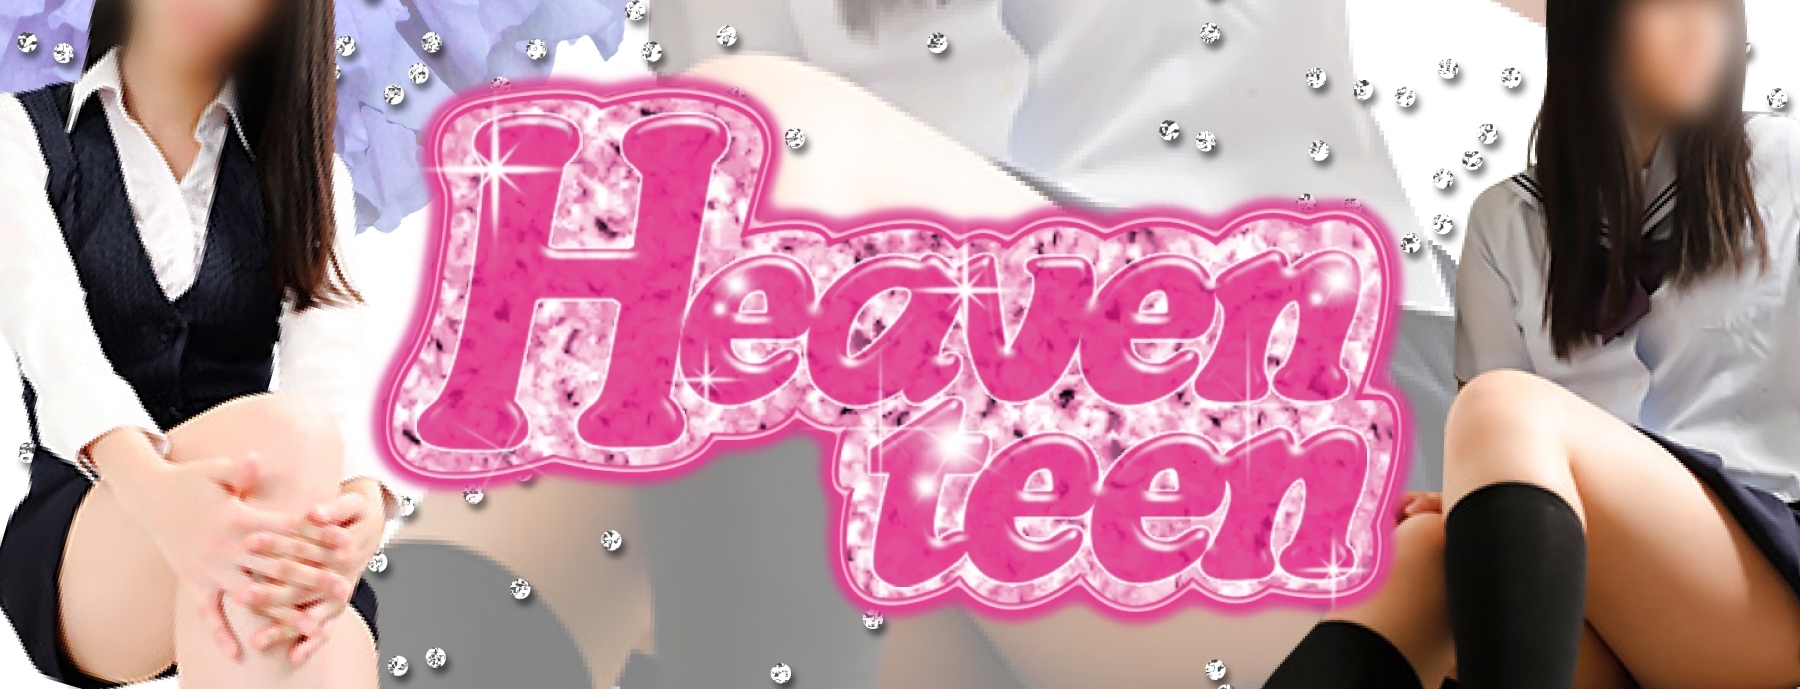 Heaven teen 〜ヘブンティーン〜